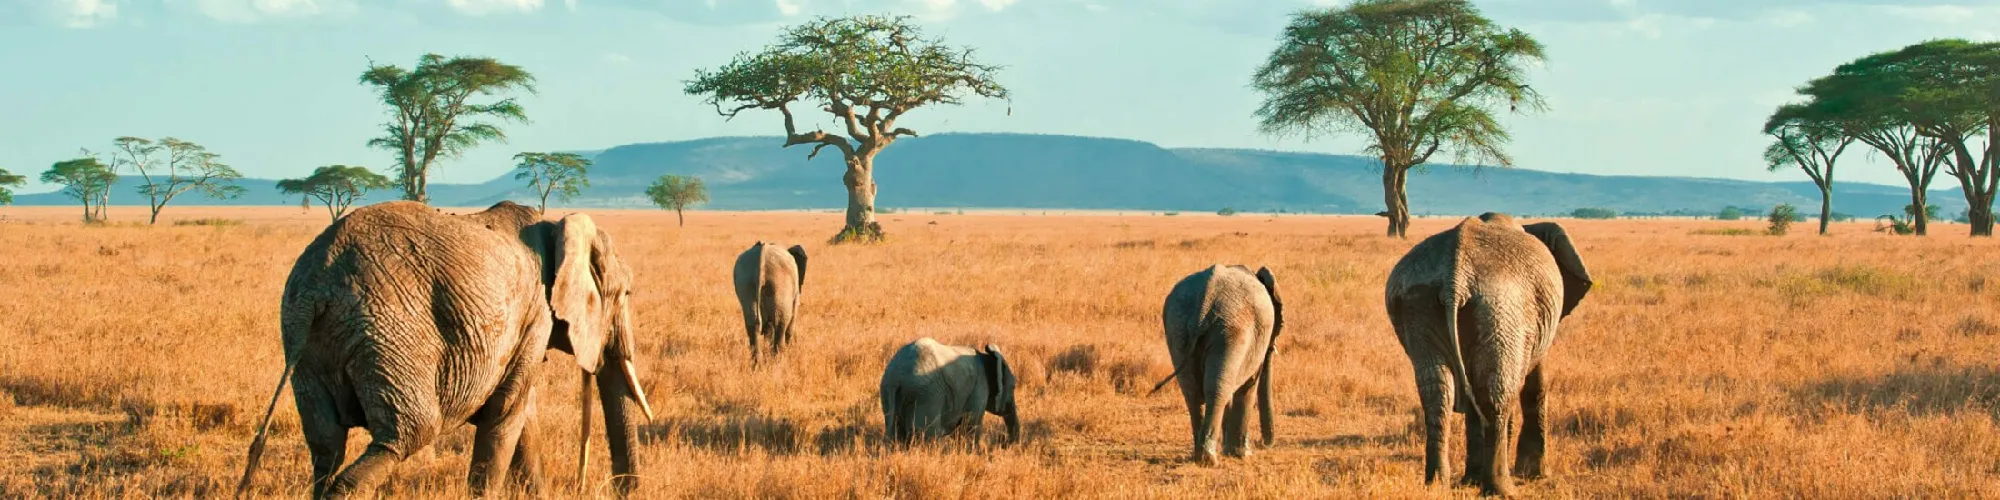 Urlaub in Tansania background image